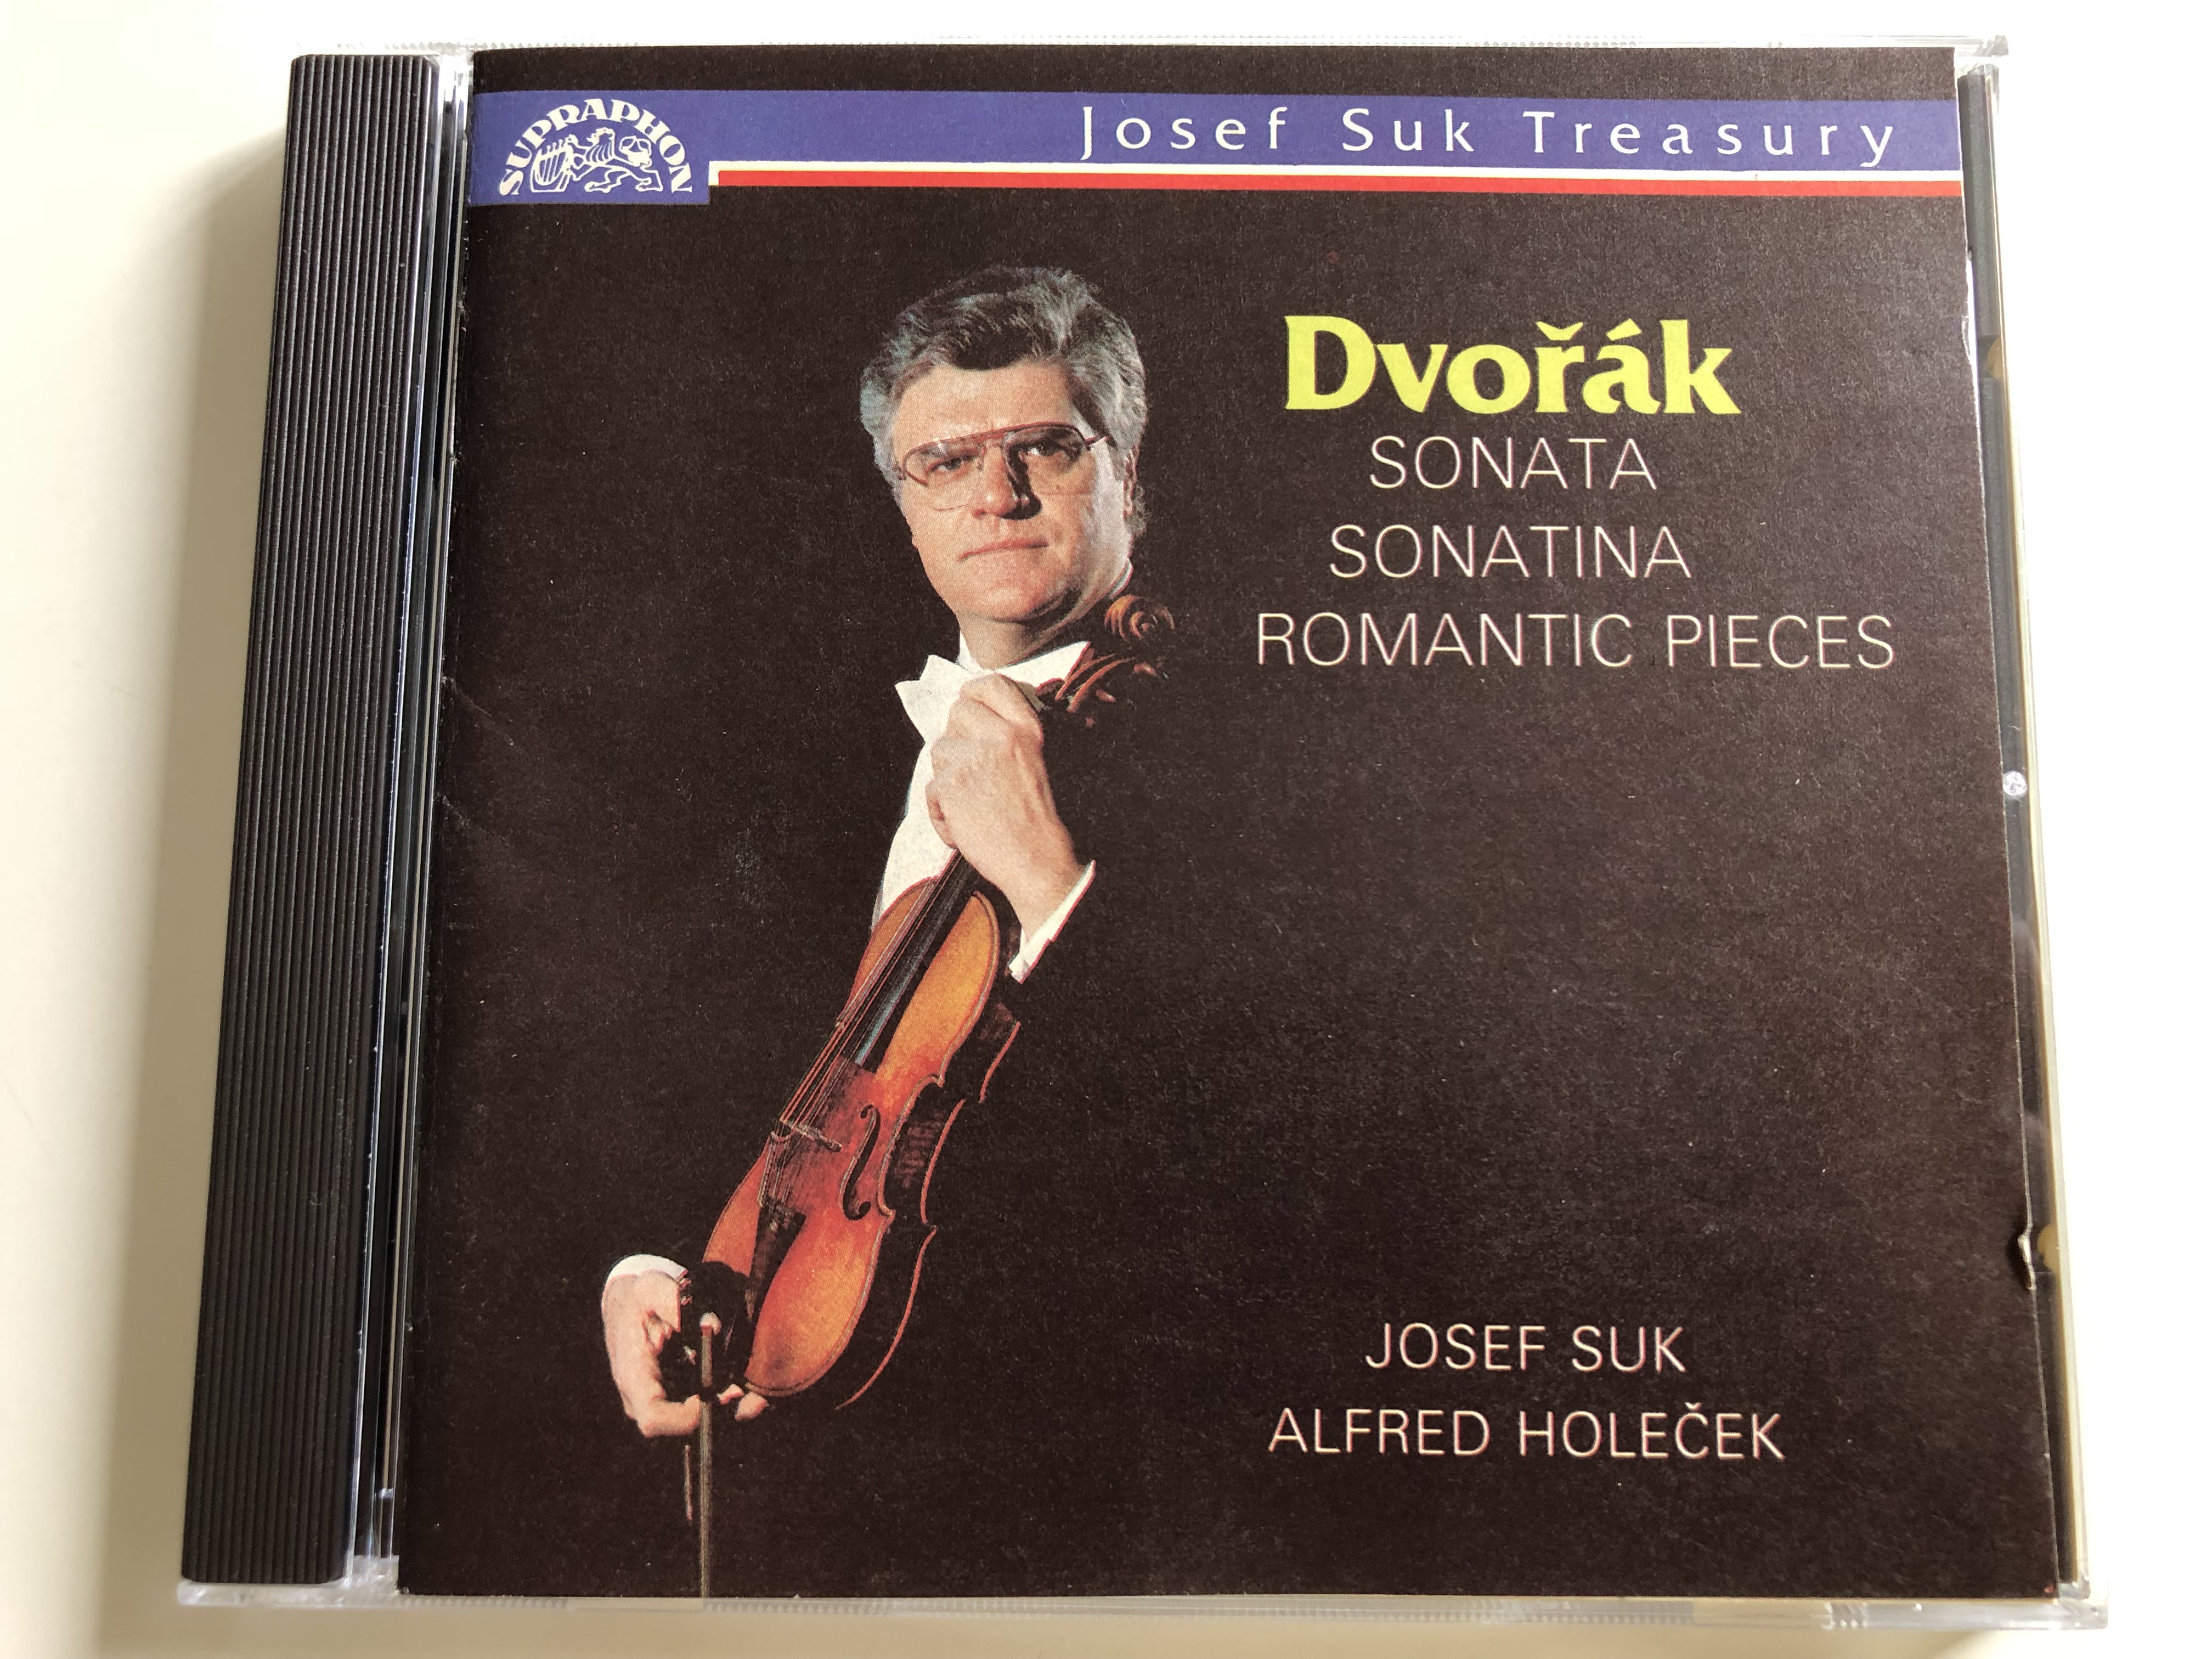 josef-suk-treasury-dvor-k-sonata-sonatina-romantic-pieces-josef-suk-violin-alfred-hole-ek-piano-supraphon-audio-cd-1989-1-.jpg